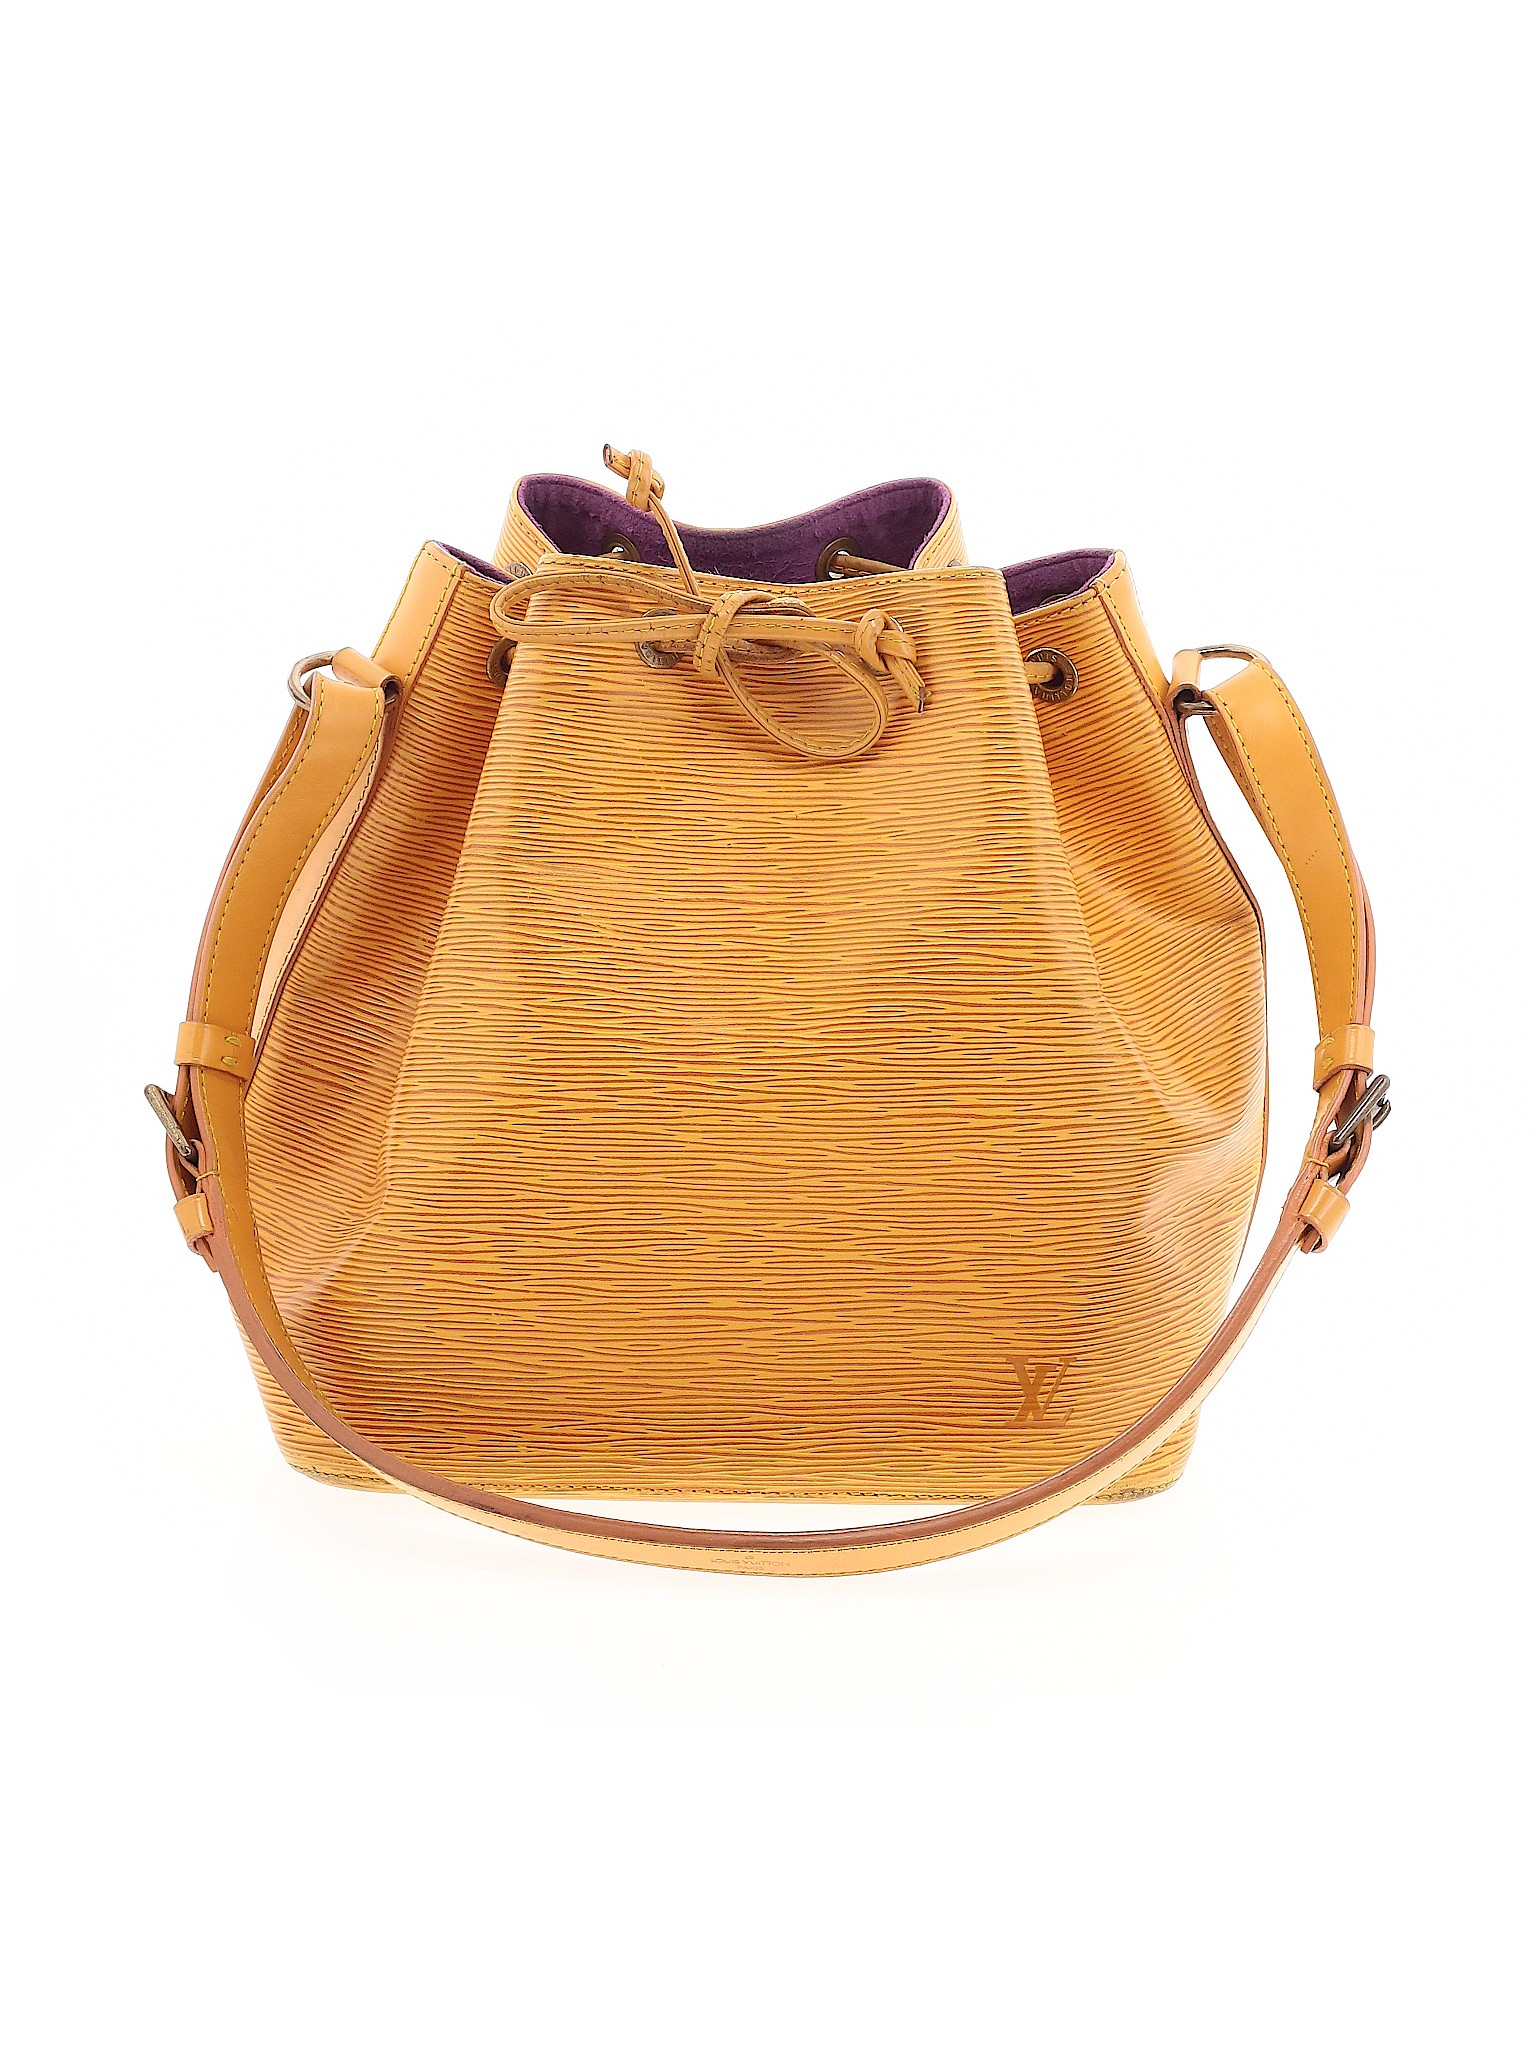 Louis Vuitton Women Yellow Leather Shoulder Bag One Size | eBay